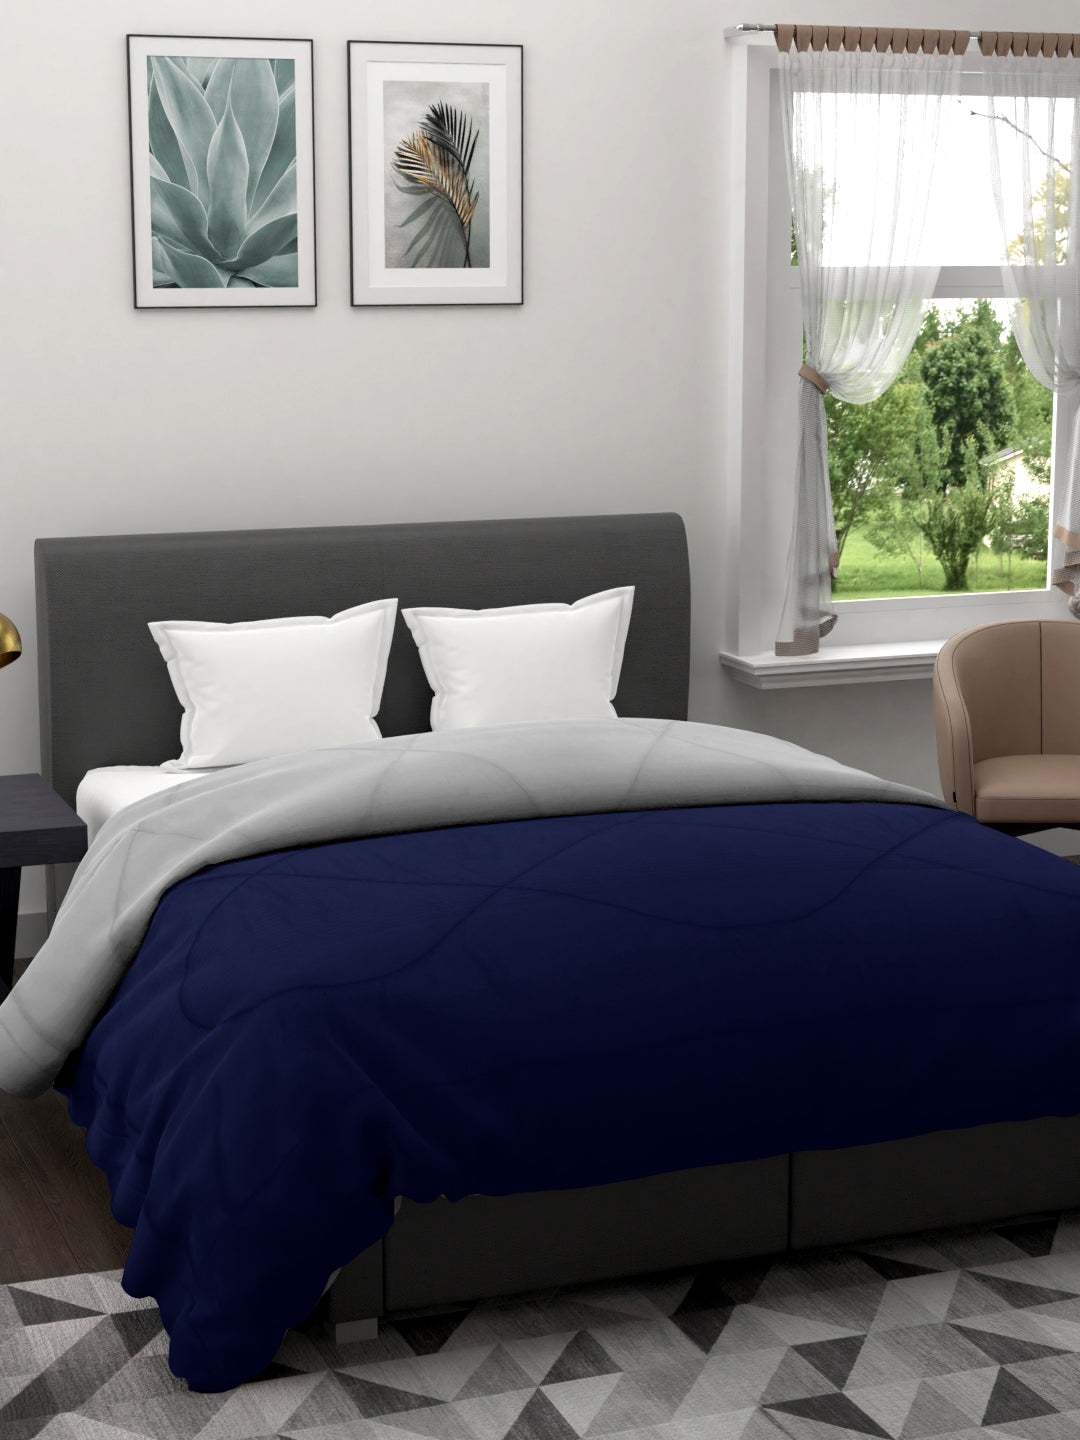 Blue & White Microfiber Double/Single comforter for Mild Winter